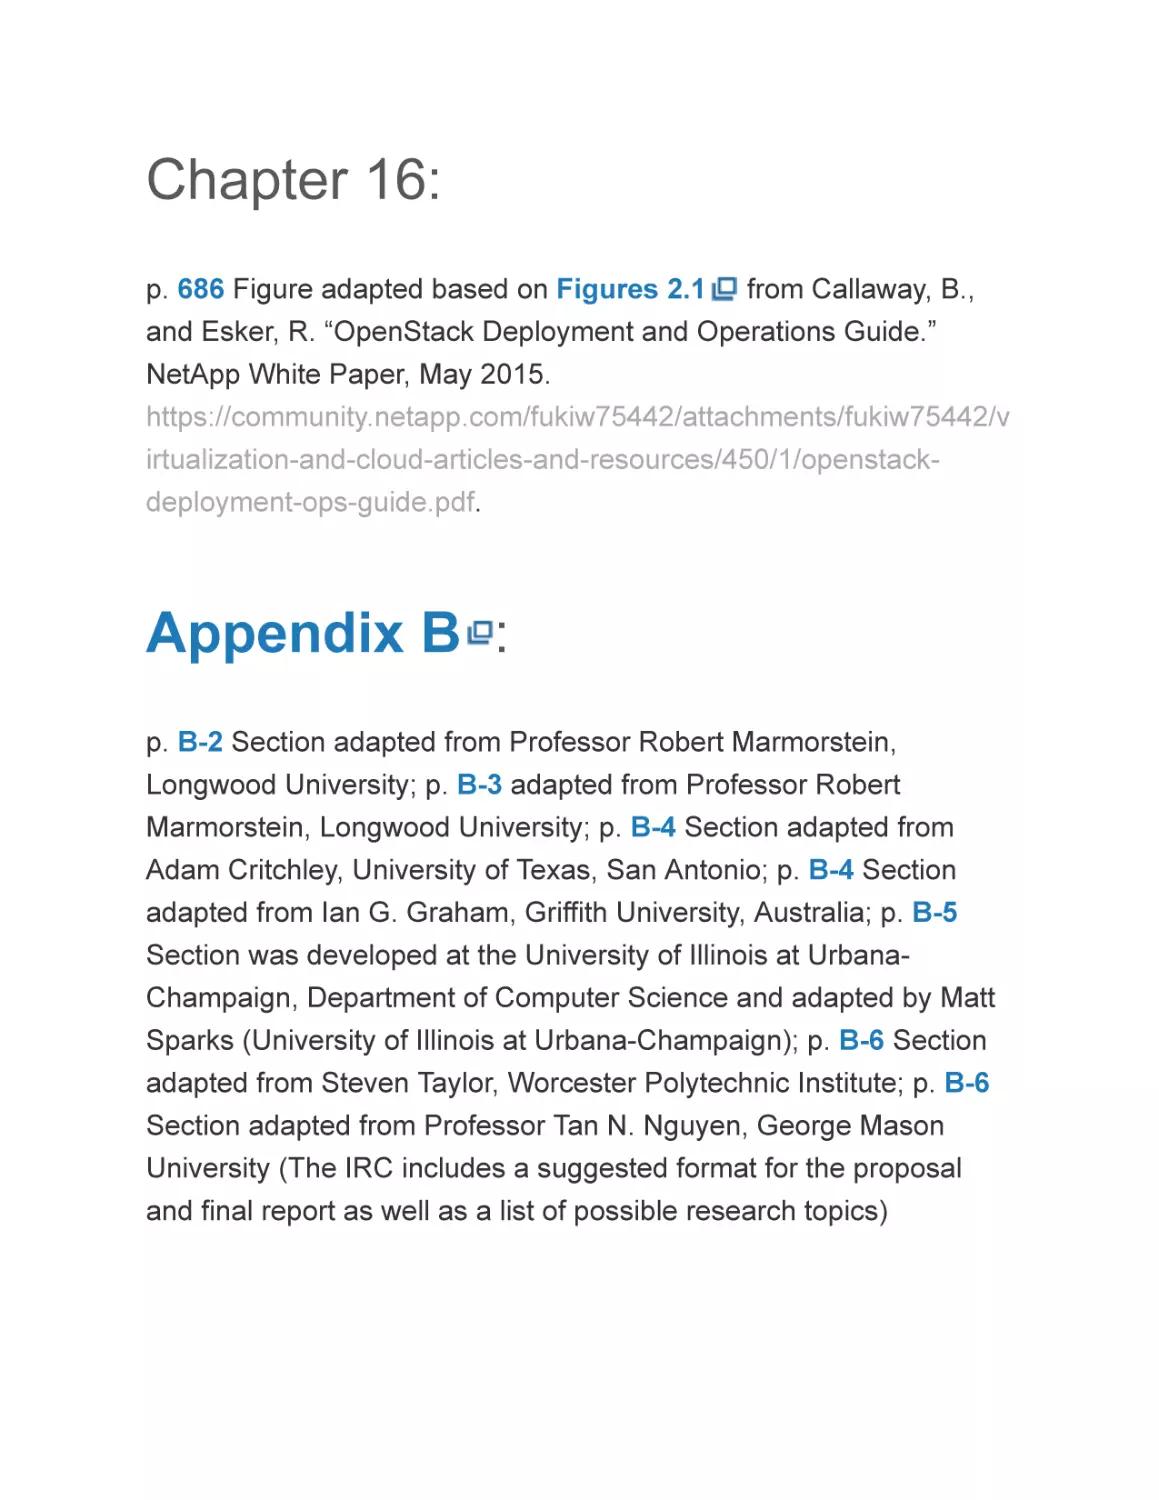 Chapter 16
Appendix B